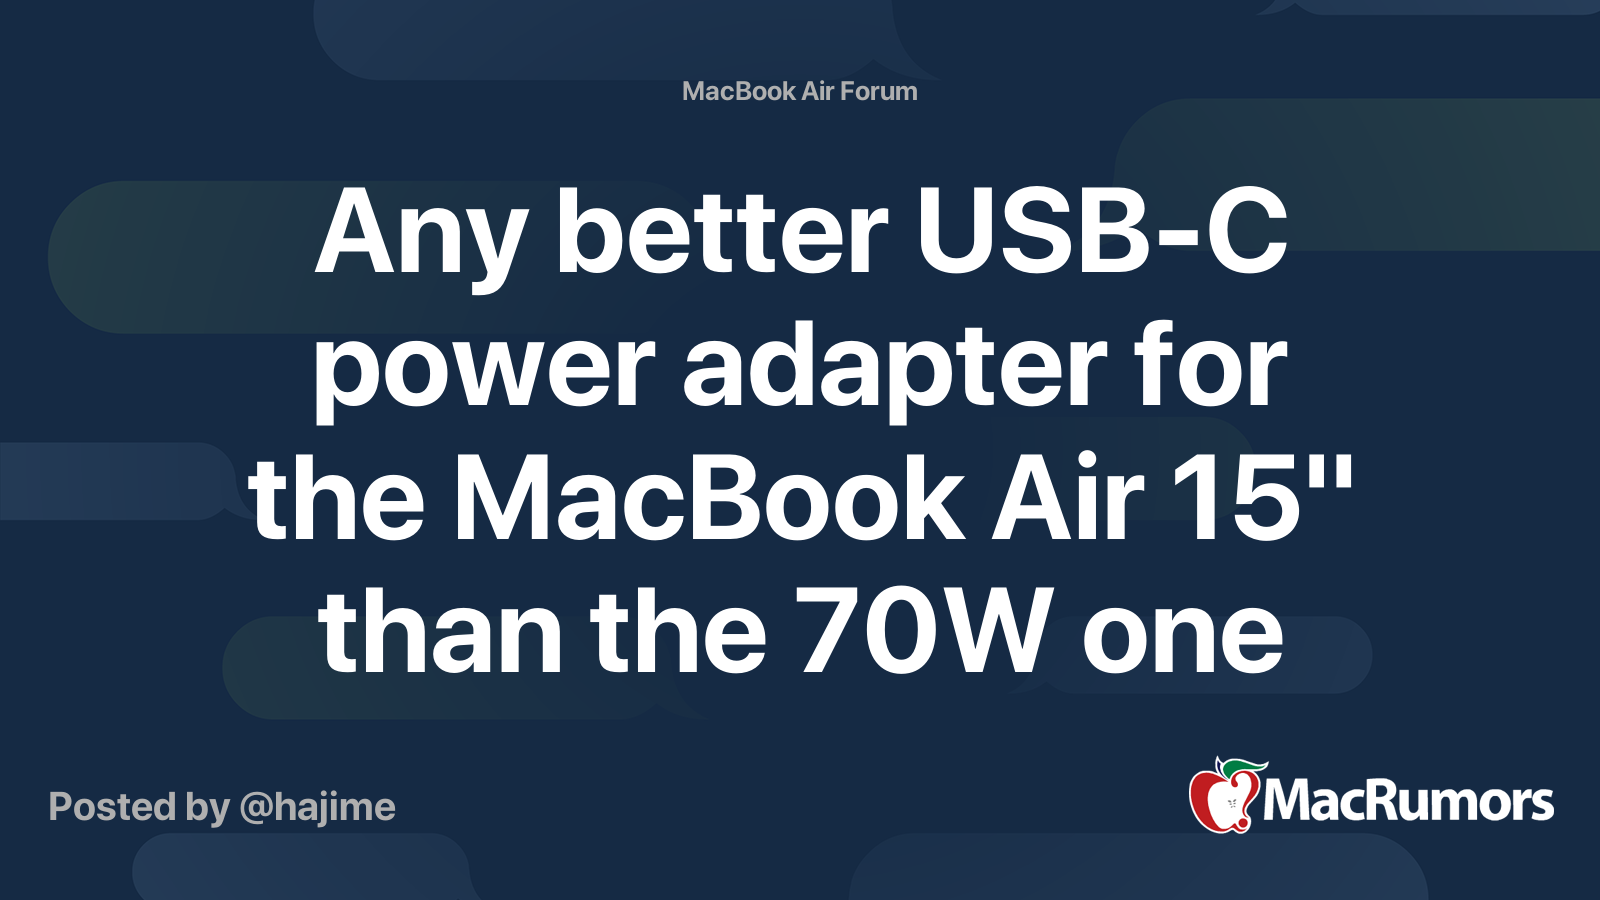 70W USB-C Power Adapter